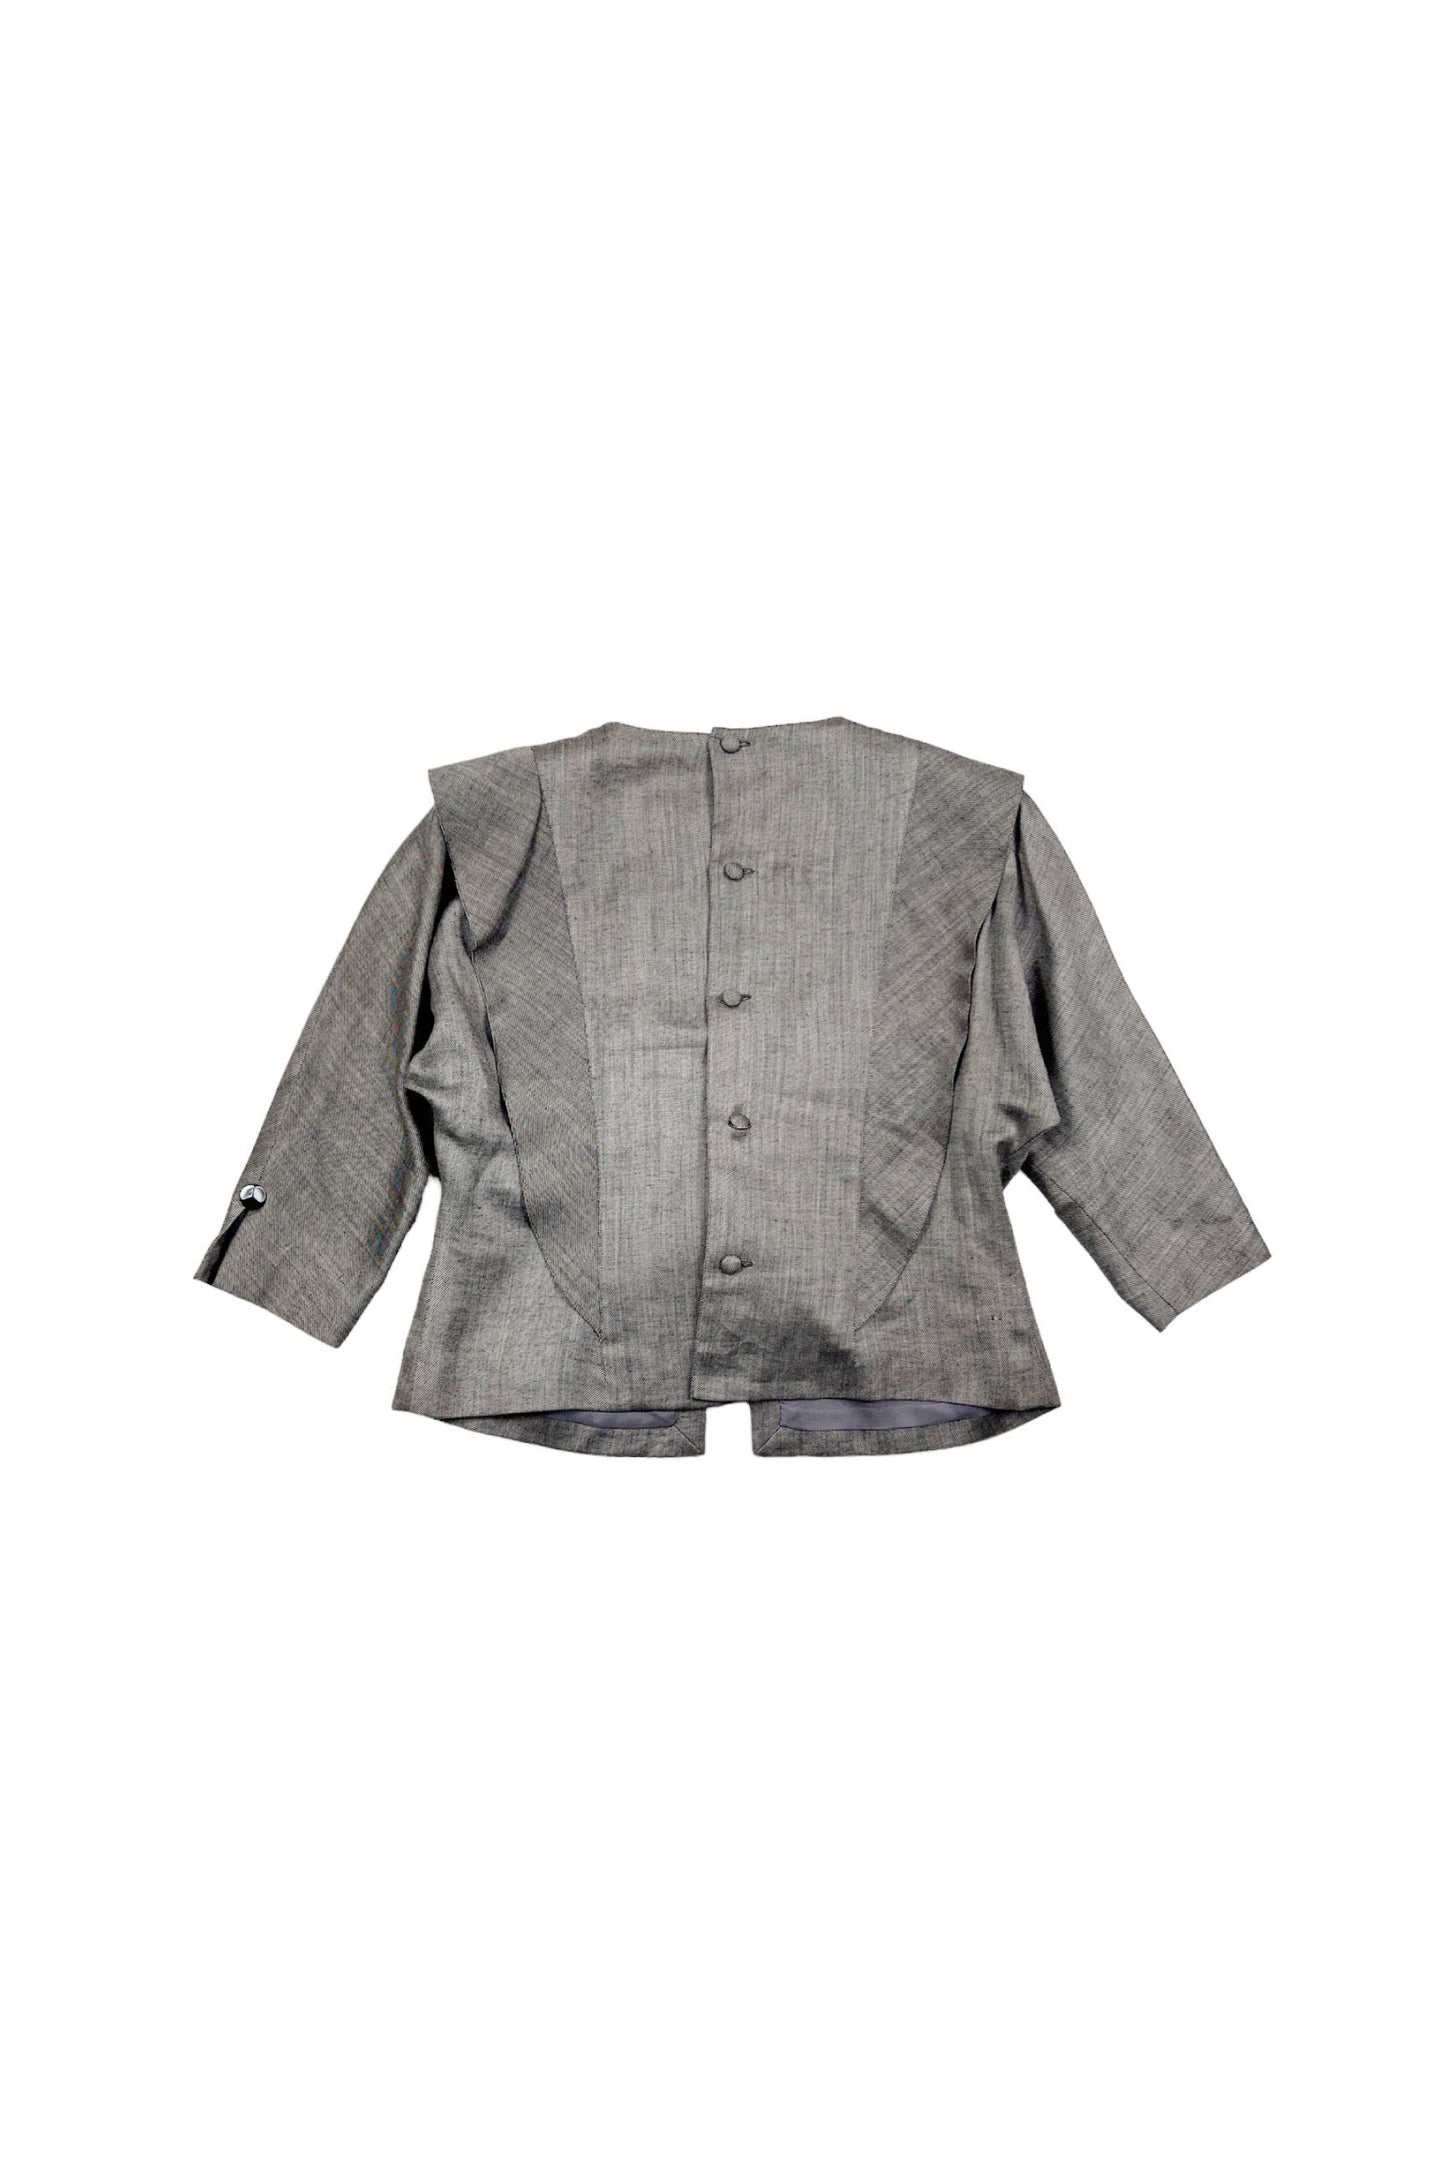 90's YUKI TORII blouse 